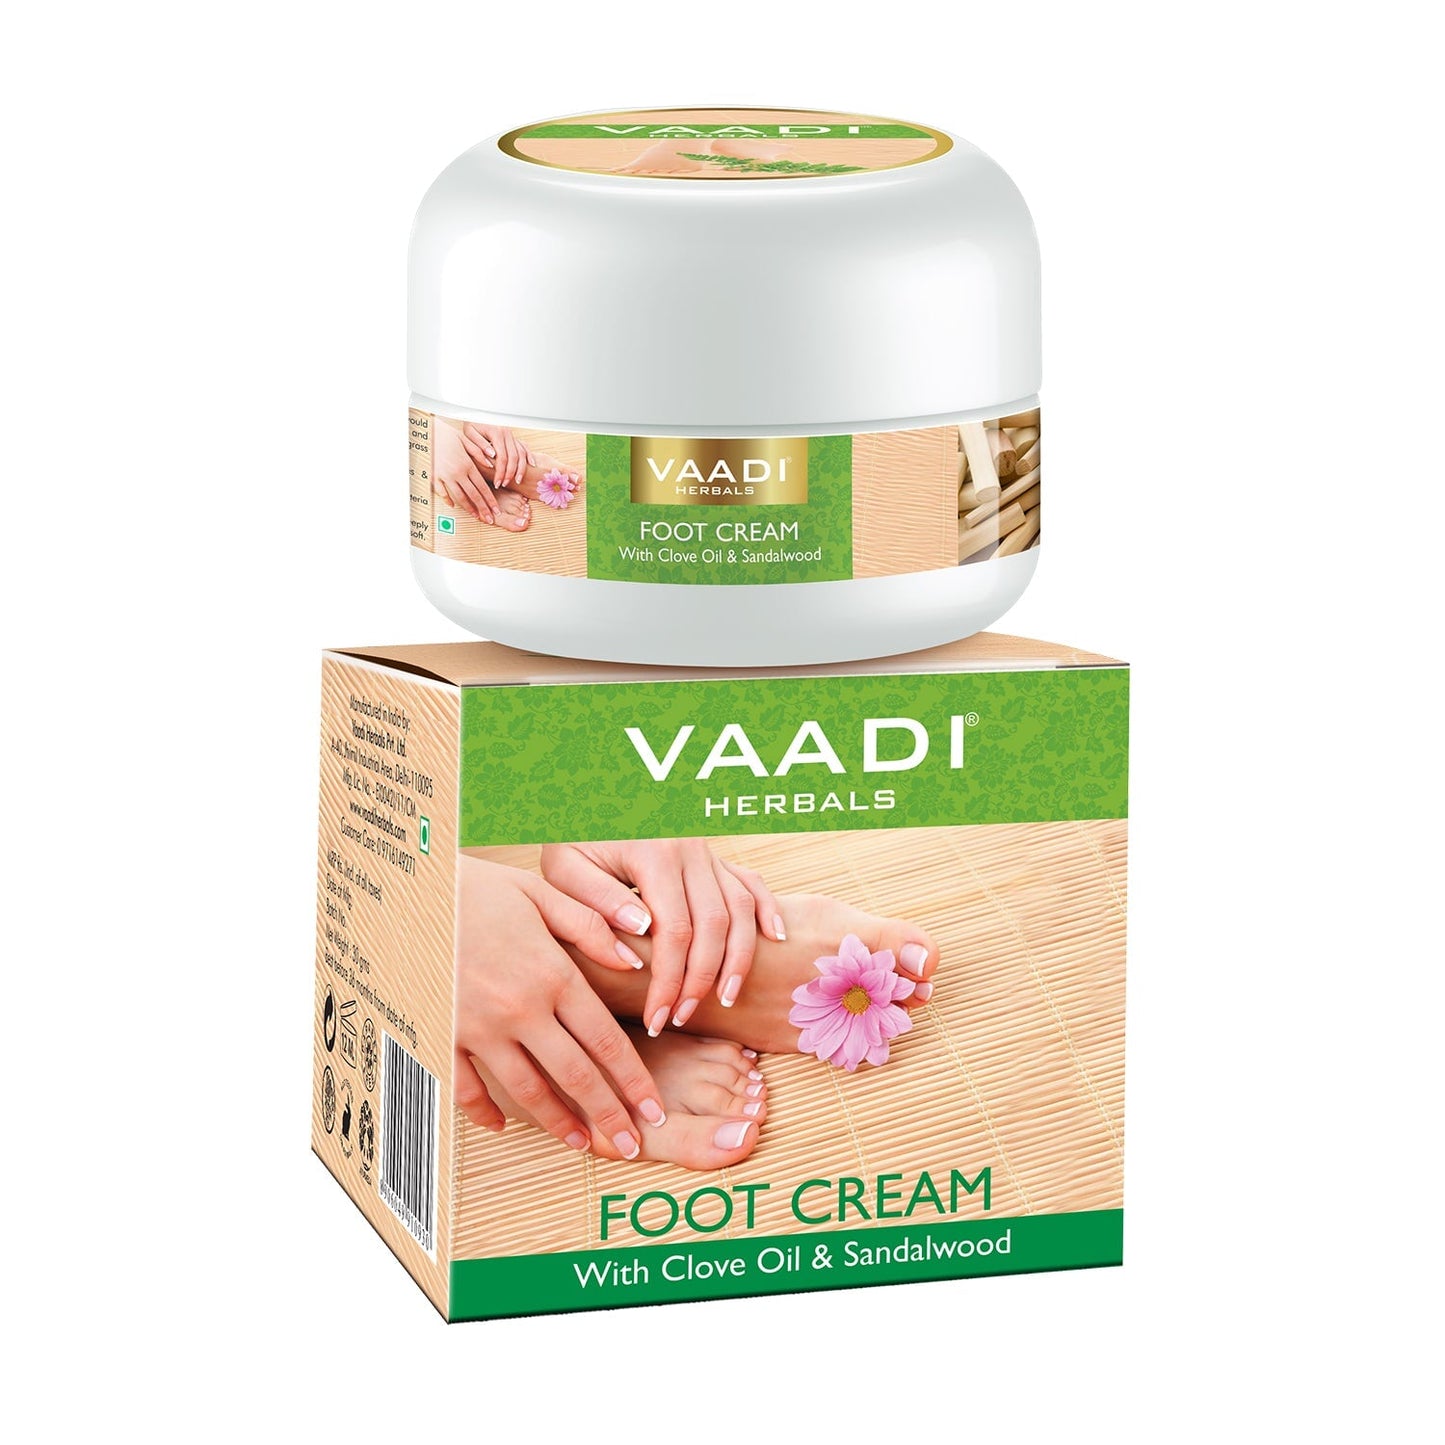 Organic Foot Cream with Clove & Sandalwood Oil - Softens Dry & Cracked Feet (30 gms / 1.1 oz)